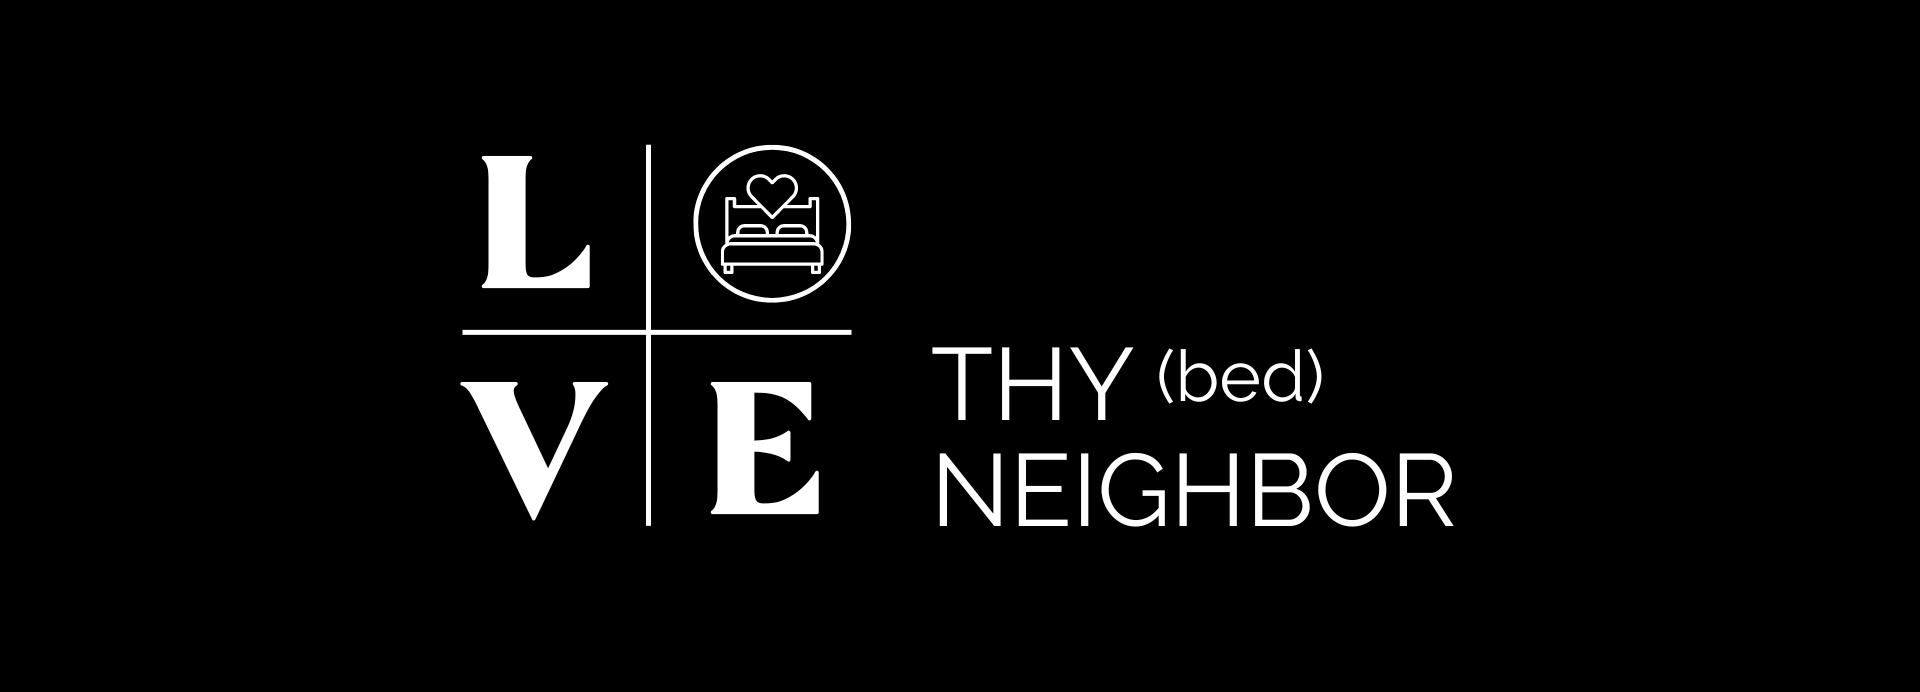 love thy bed neighbor